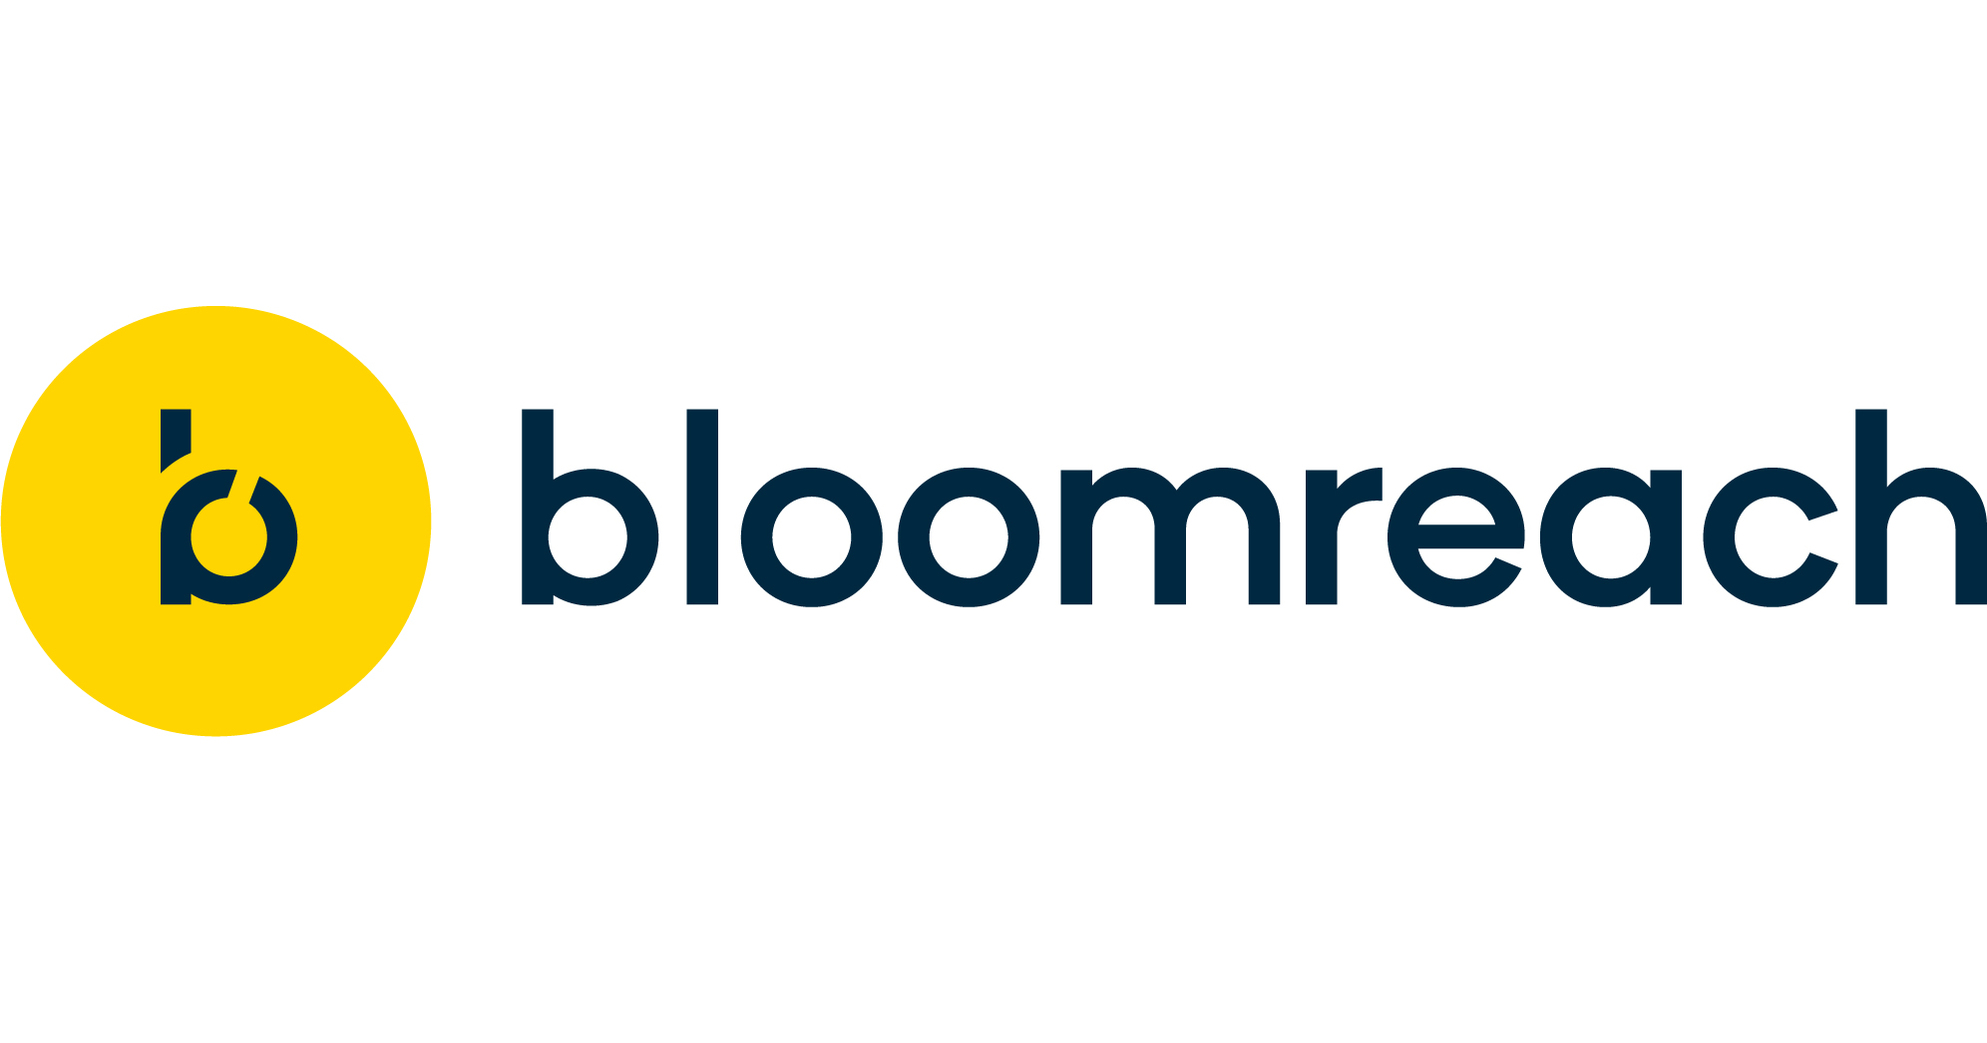 bloomreach announces launch of new content module